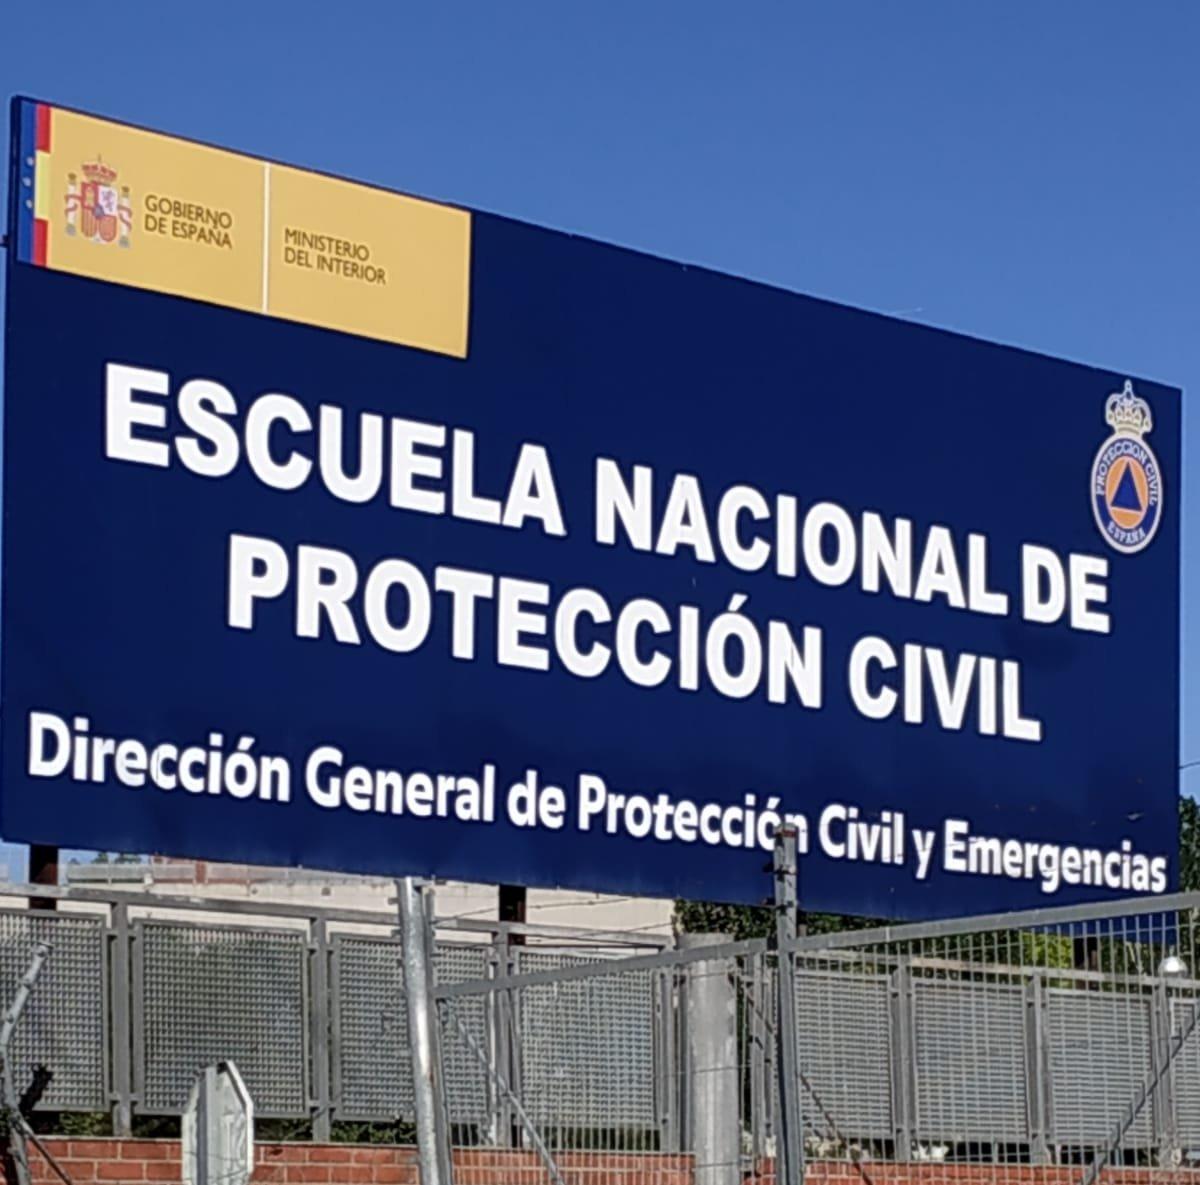 Escuela Nacional de Proteccin Civil